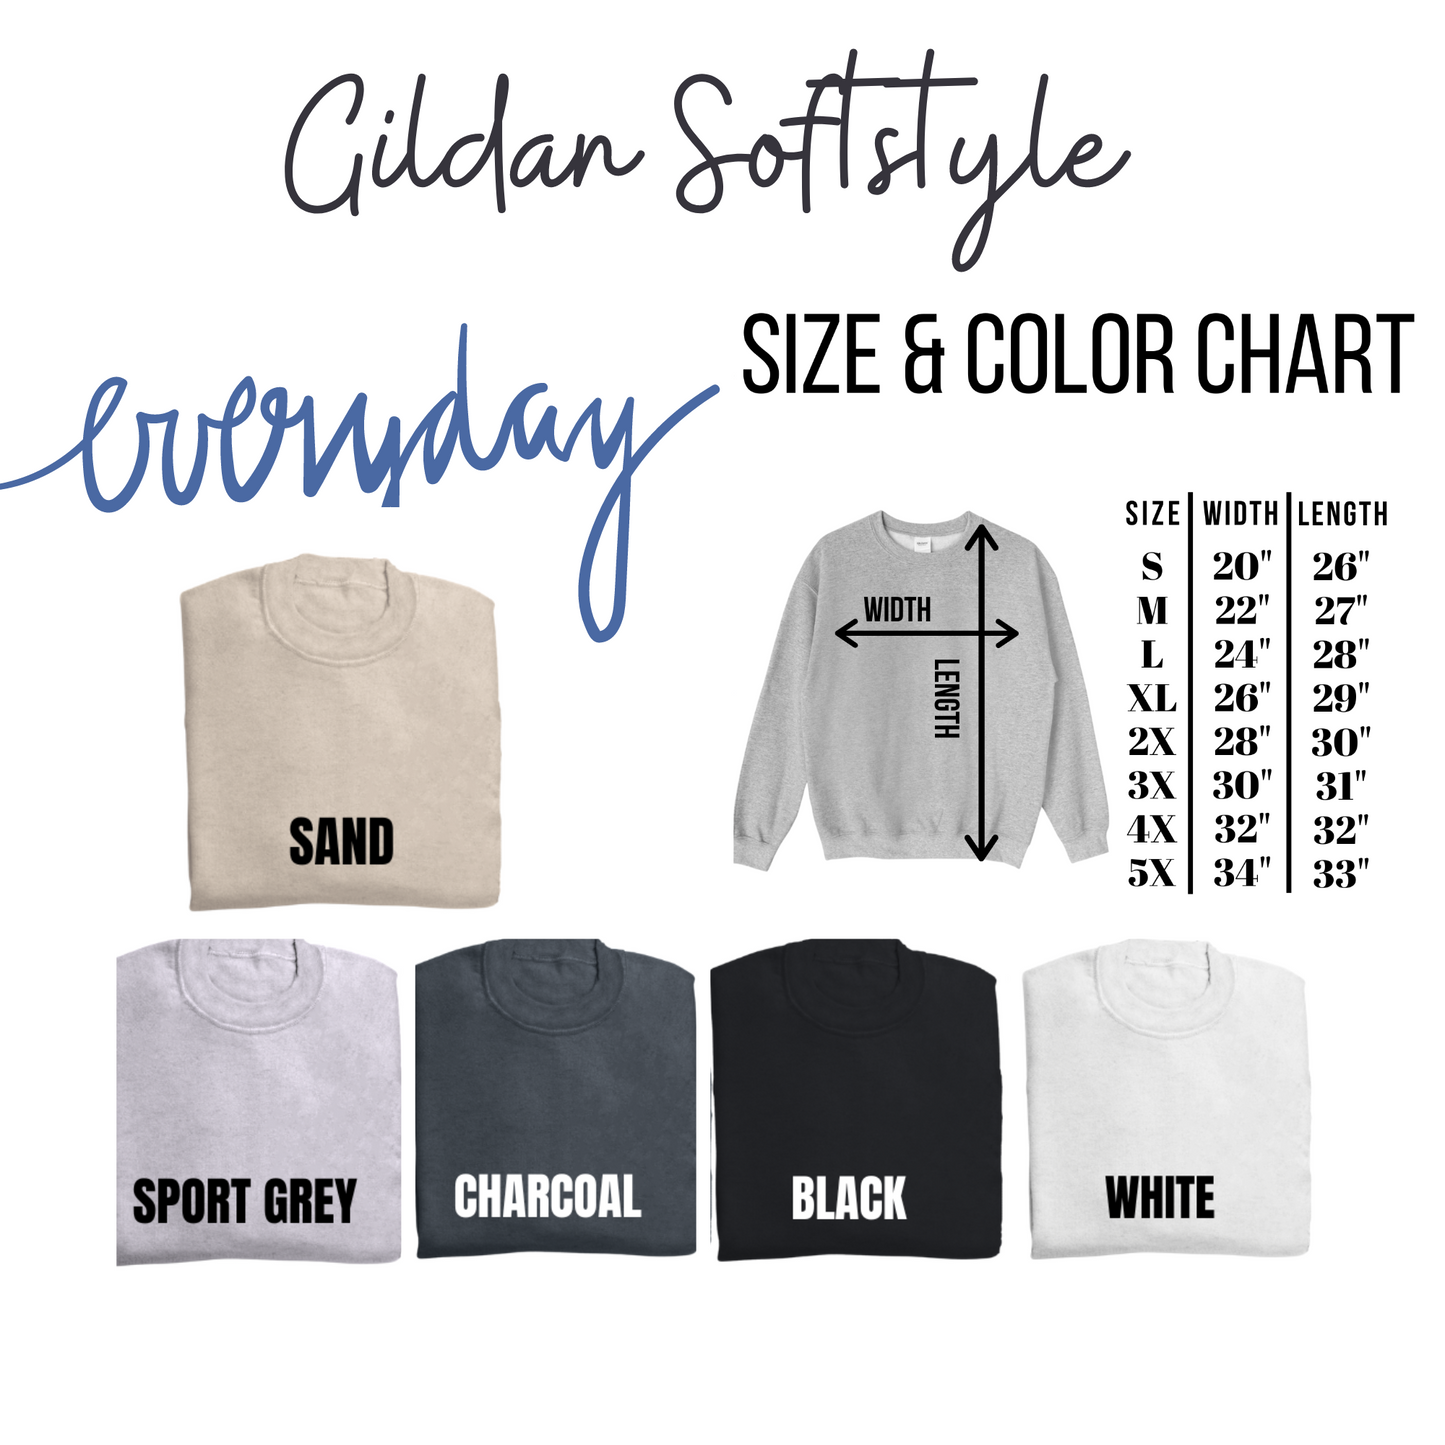 Get Your Fat Pants Ready Thanksgiving Gildan Softstyle Sweatshirt